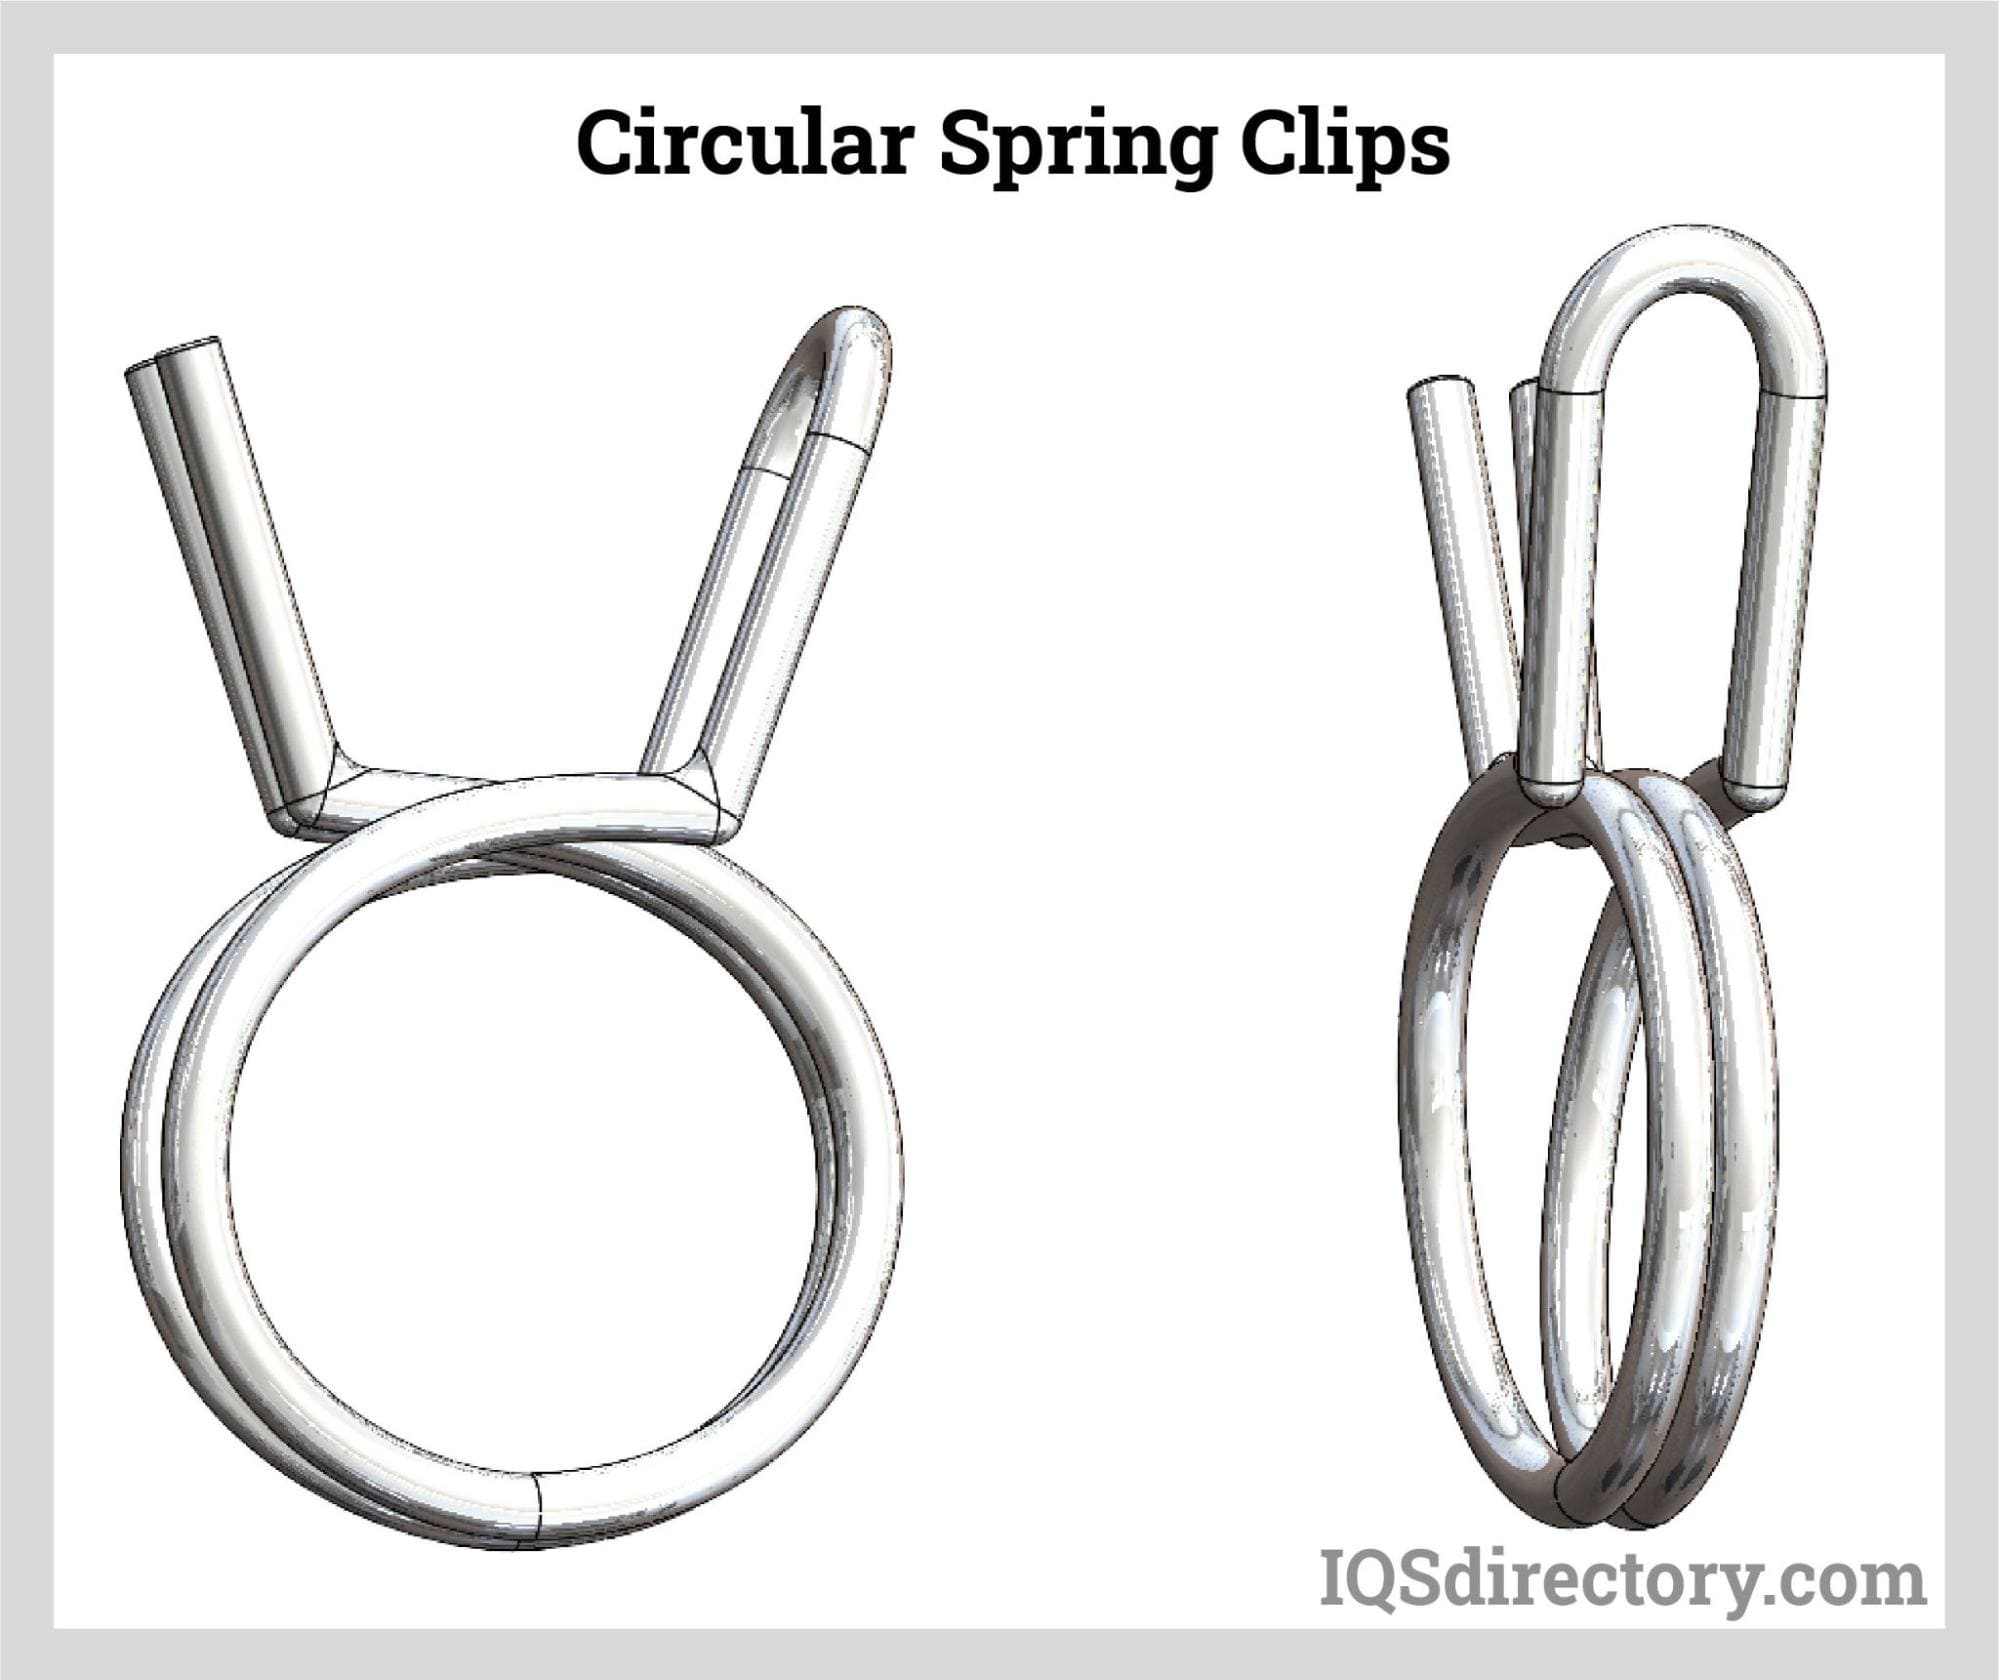 Spring Clip Companies  Spring Clip Suppliers